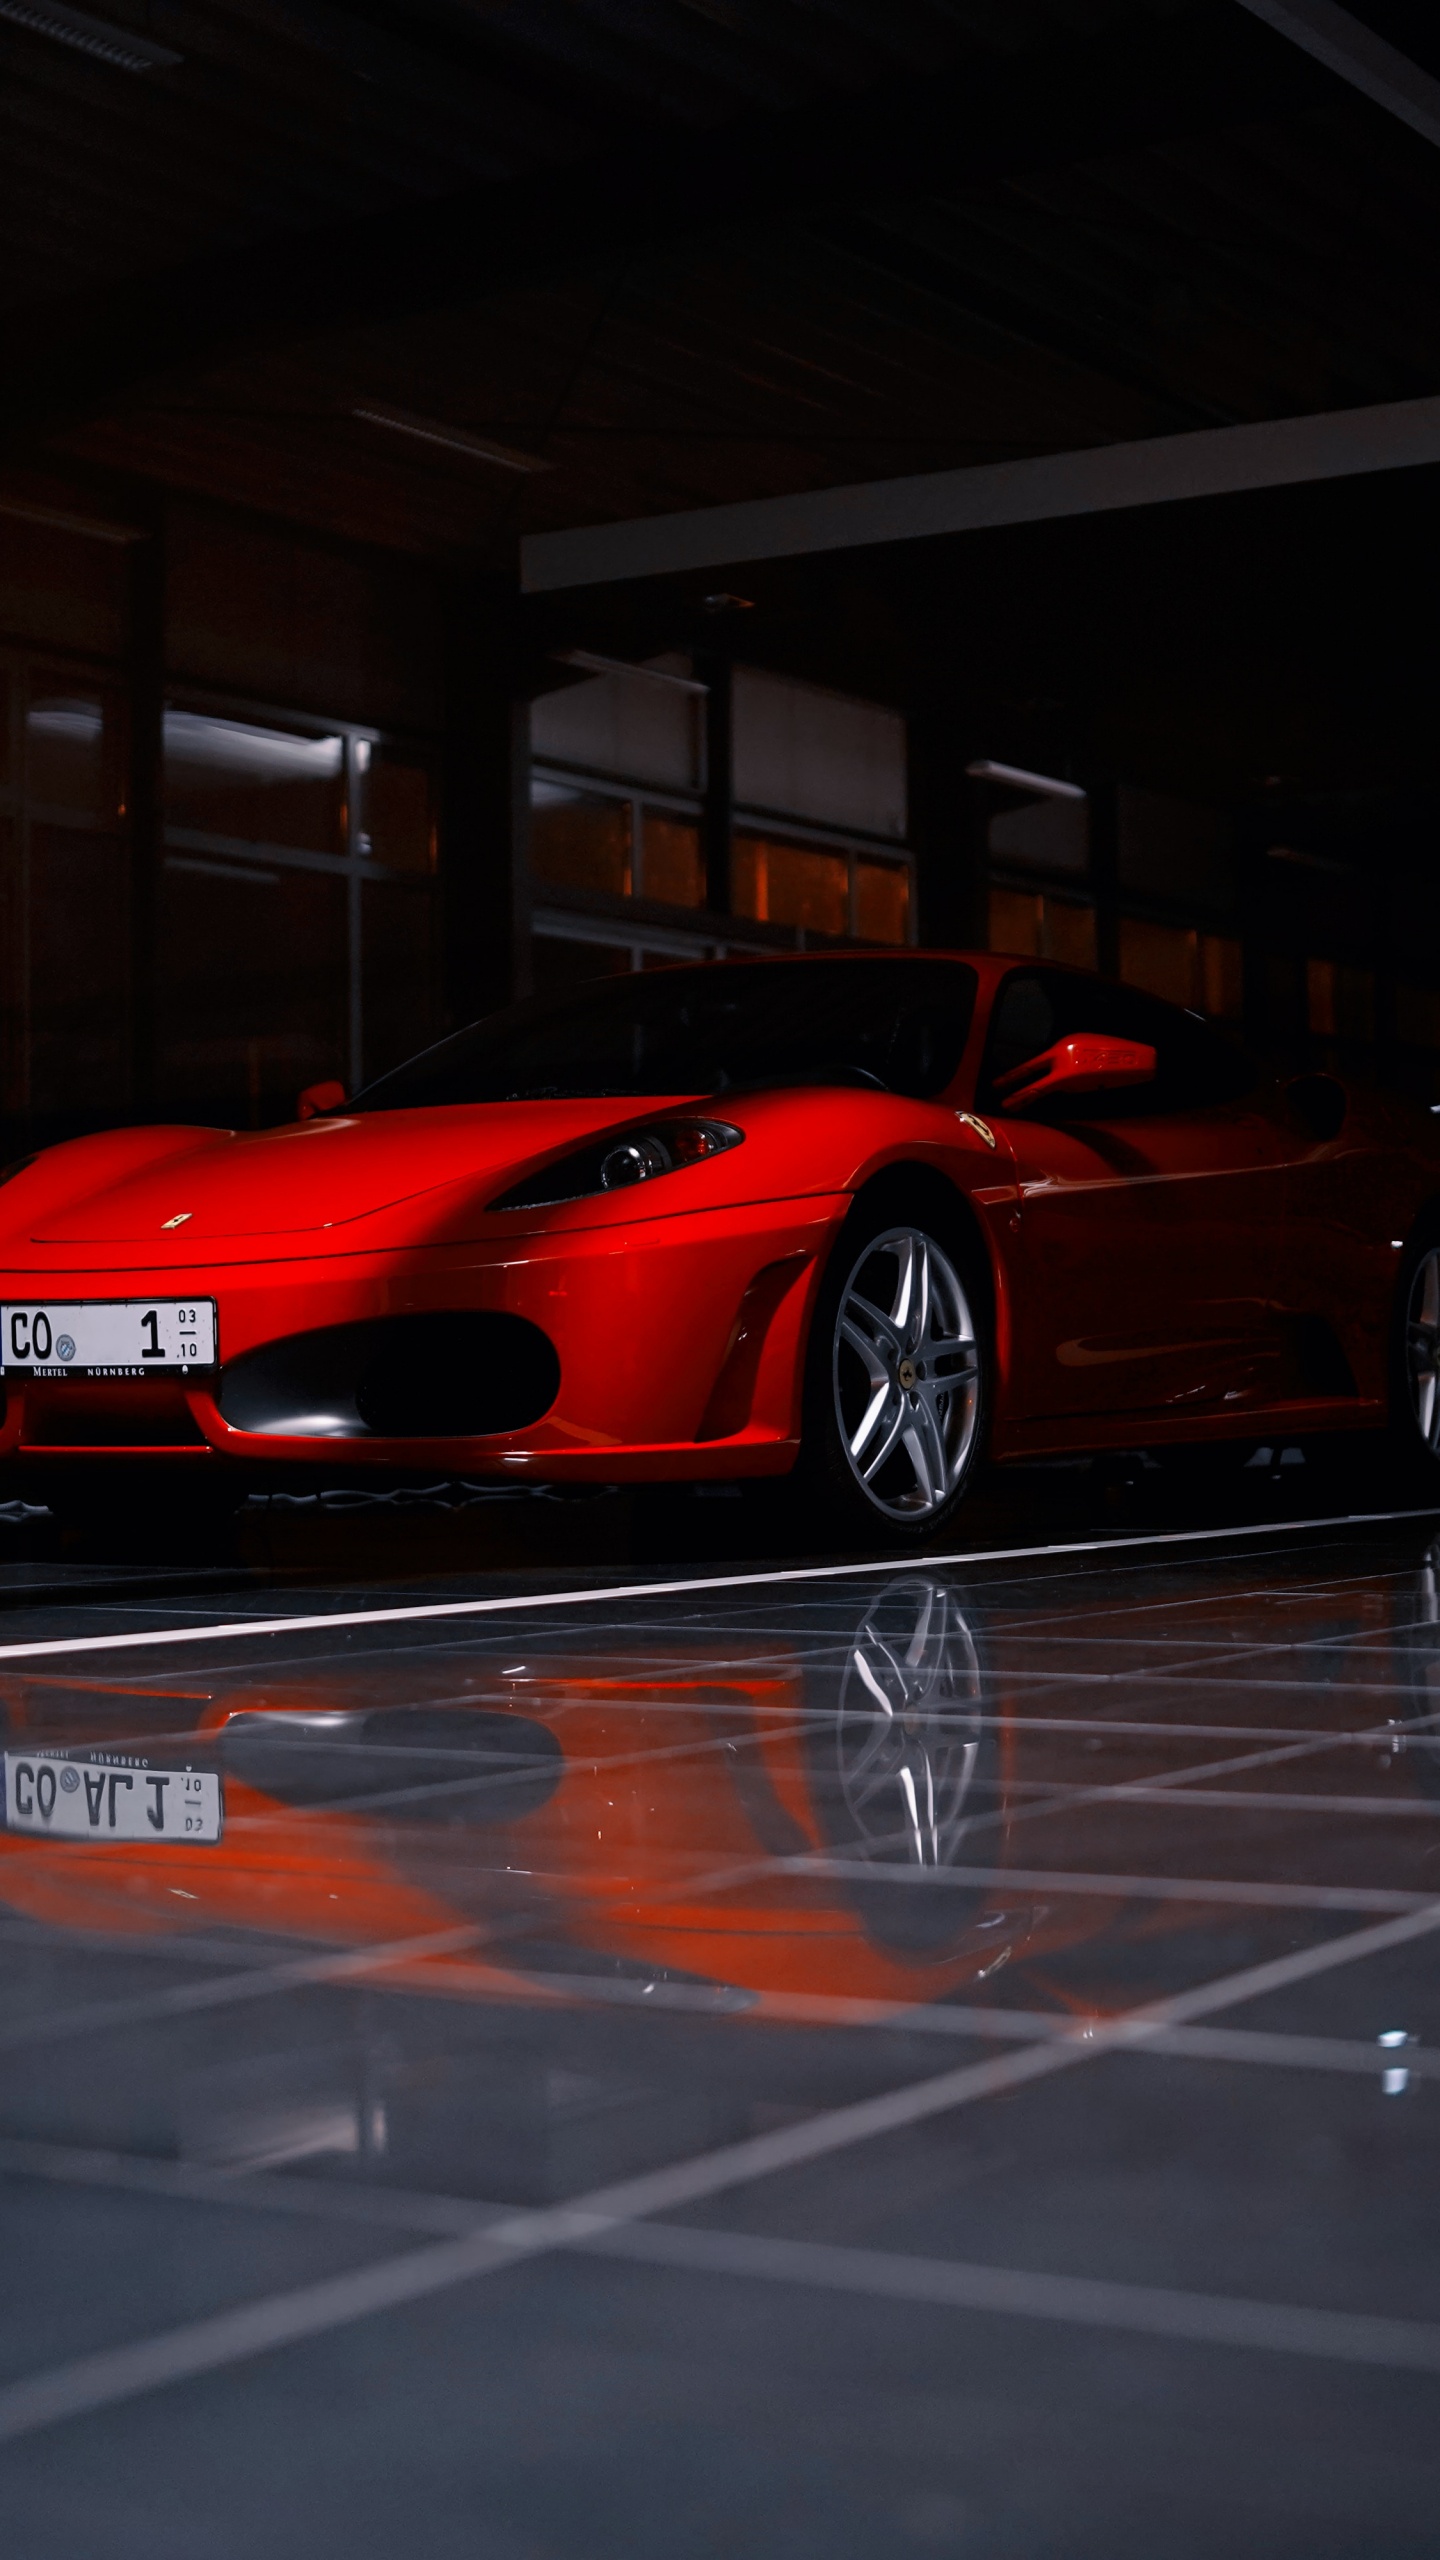 Ferrari Rouge 458 Italia Garée Sur Parking. Wallpaper in 1440x2560 Resolution